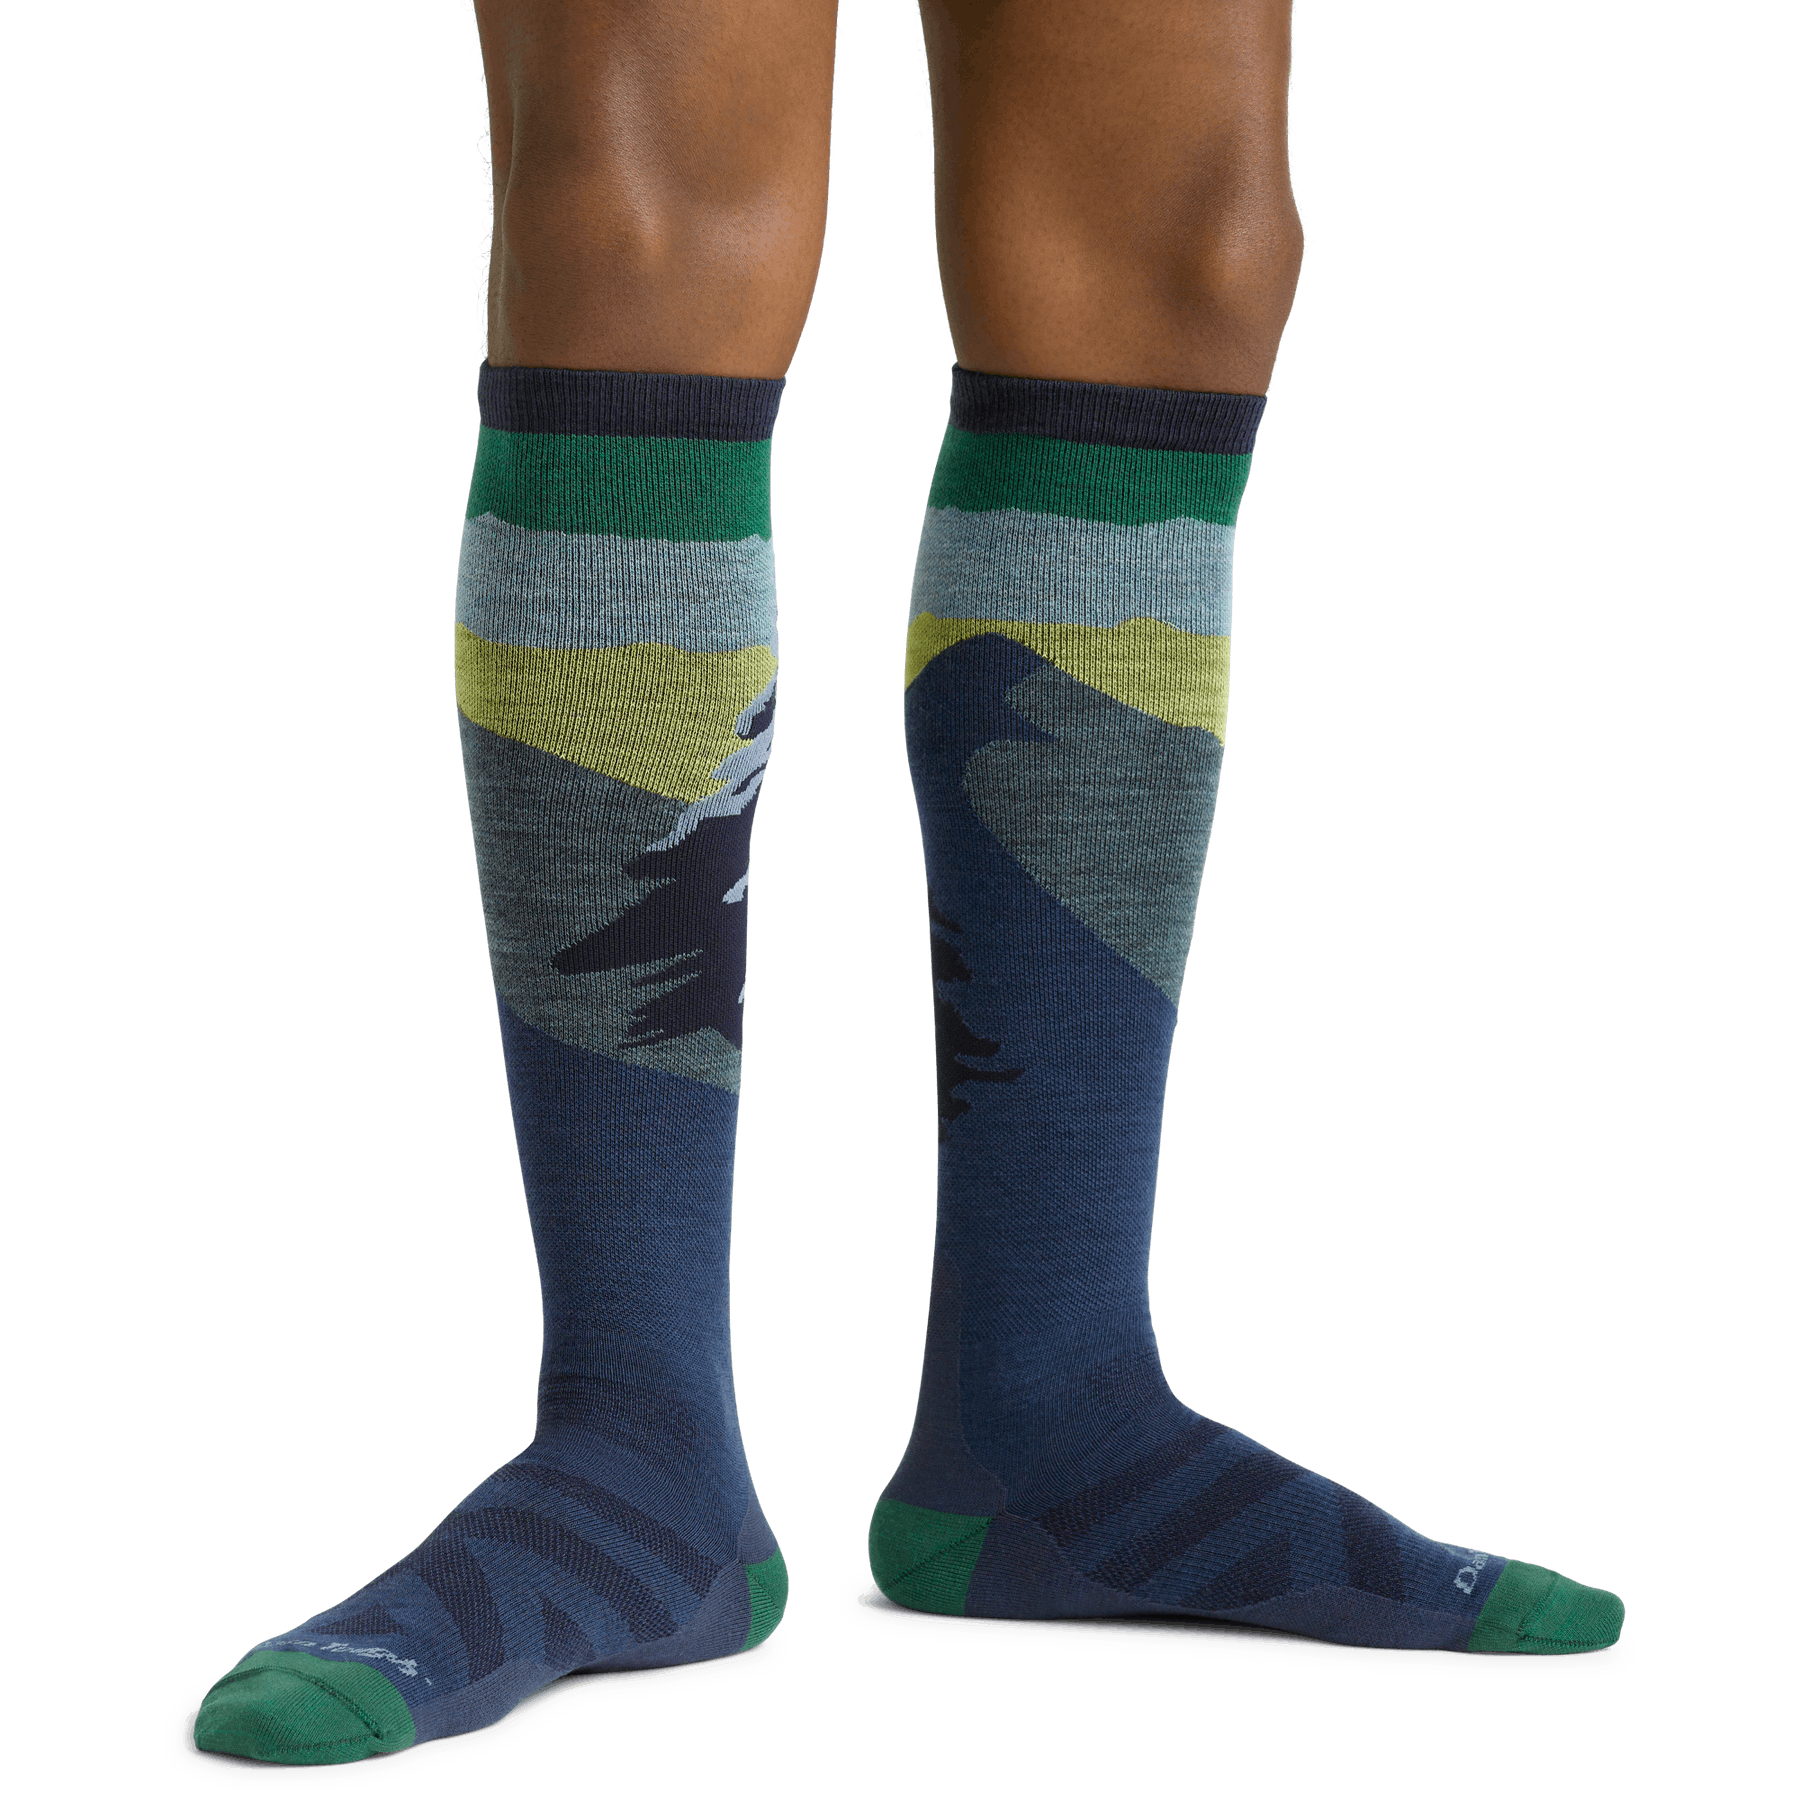 Darn Tough Men's Solstice Lightweight OTC Socks